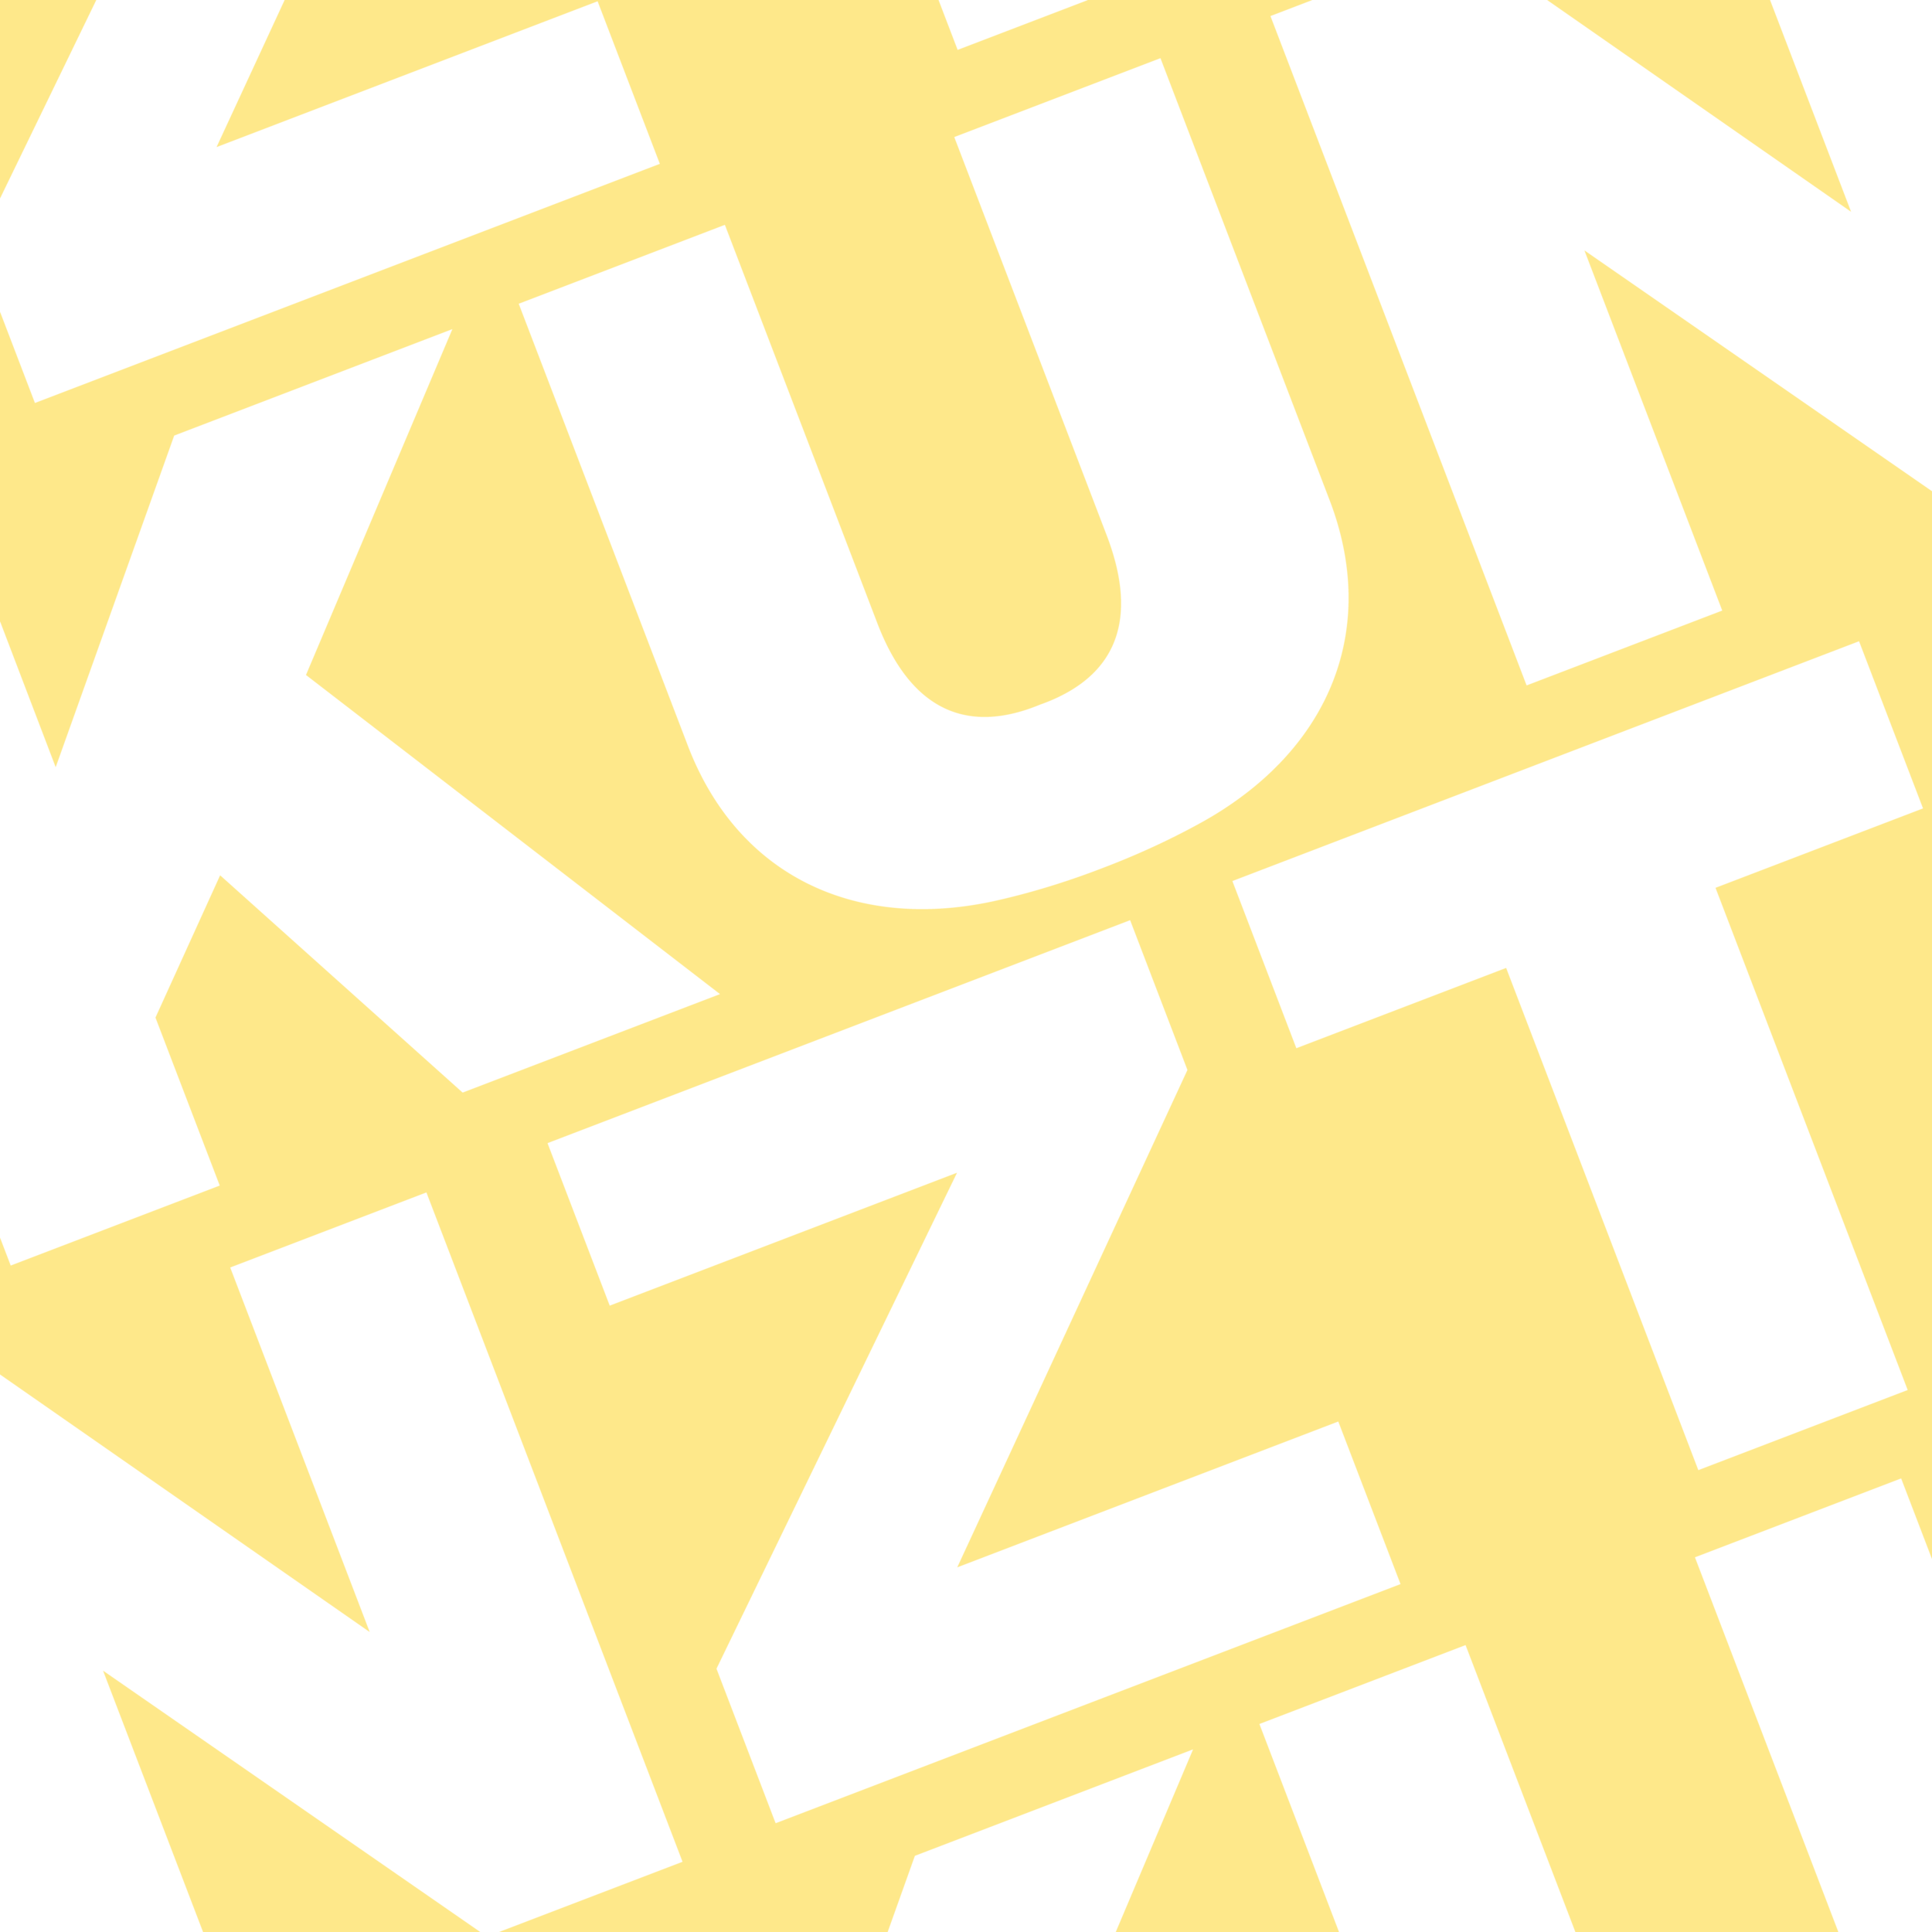 Kunzt_White_Yellow_Insta Square.png